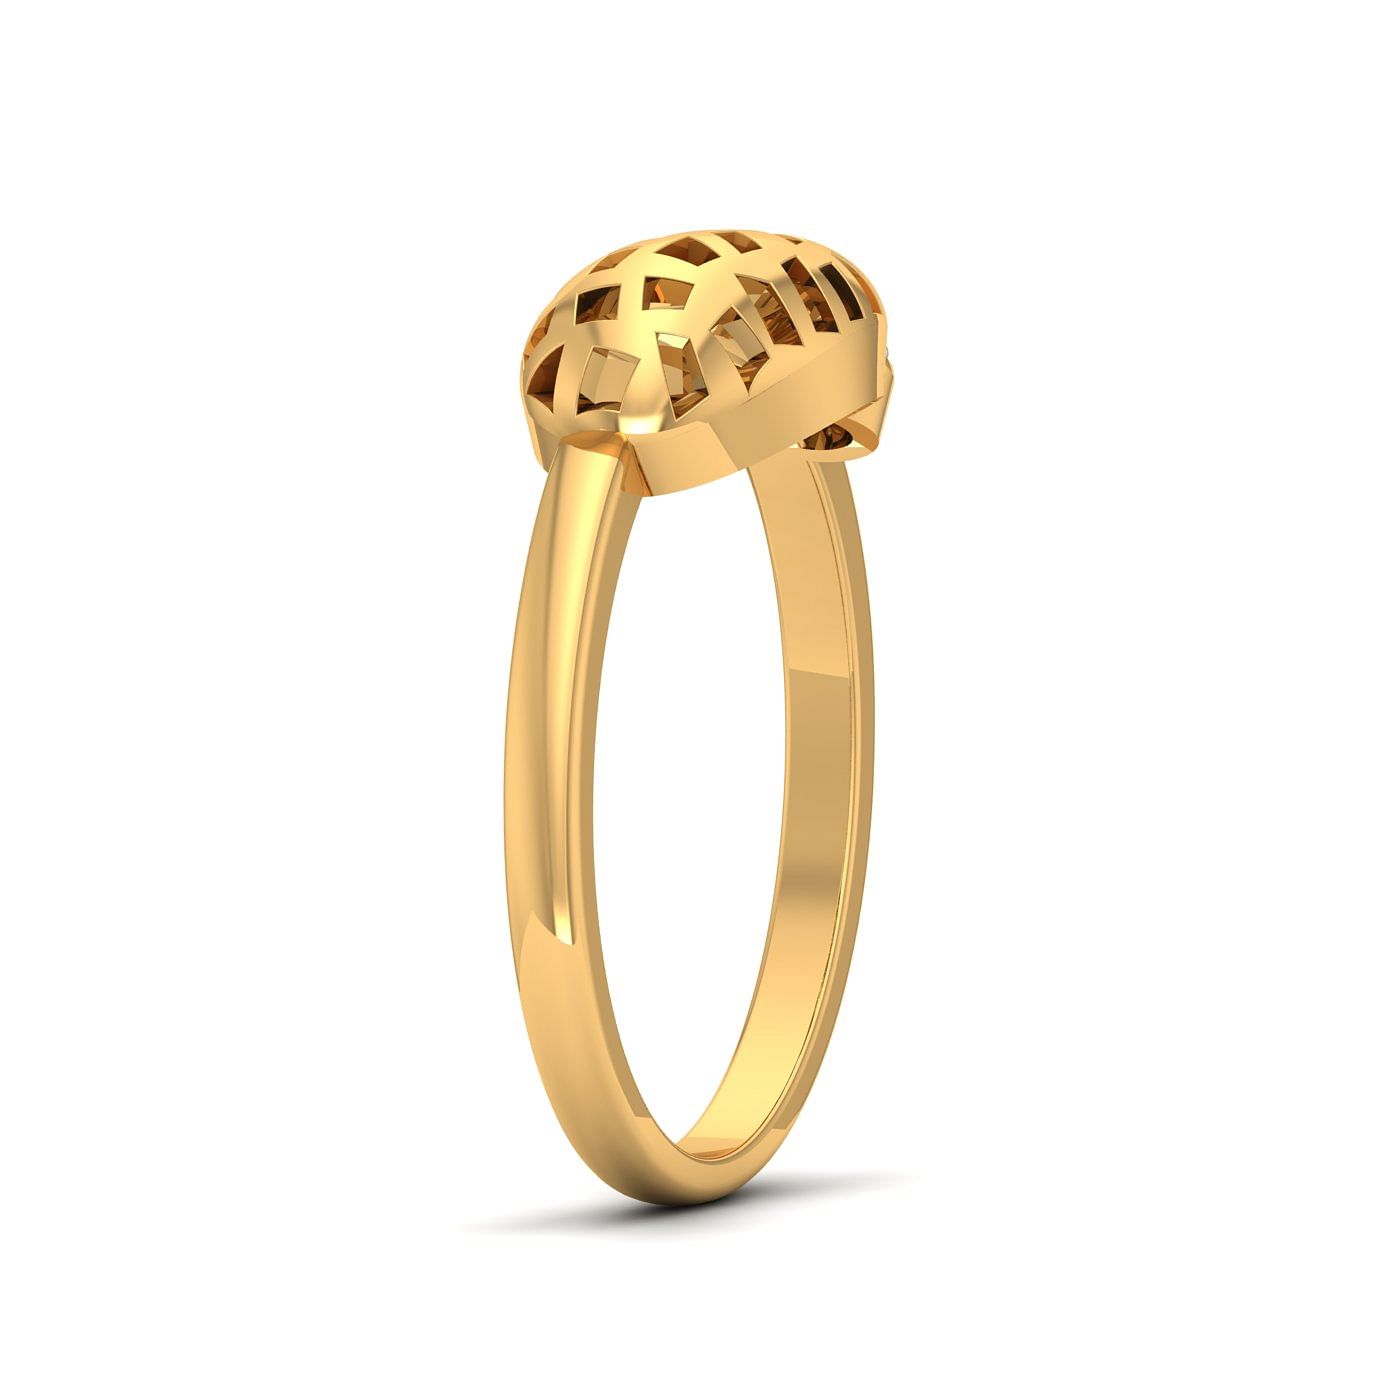 Aadhya Diamond Ring For Women | Modern Style Design Diamond Ring For Women In Yellow Gold